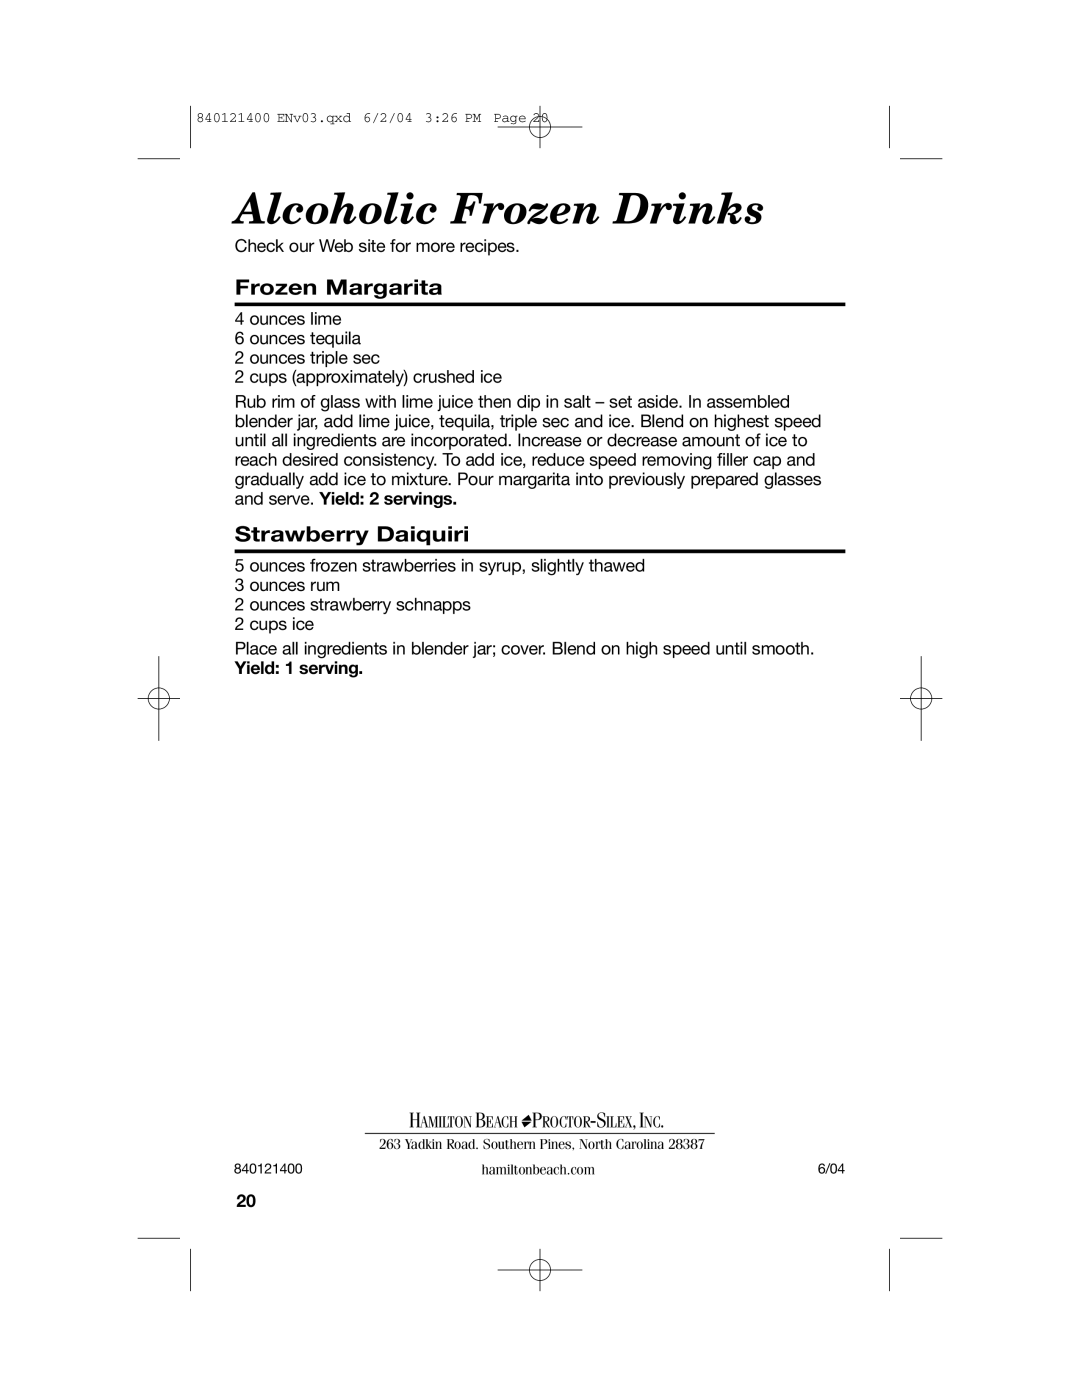 Hamilton Beach All-Metal Blender manual Frozen Margarita, Strawberry Daiquiri, Alcoholic Frozen Drinks, Yield 1 serving 